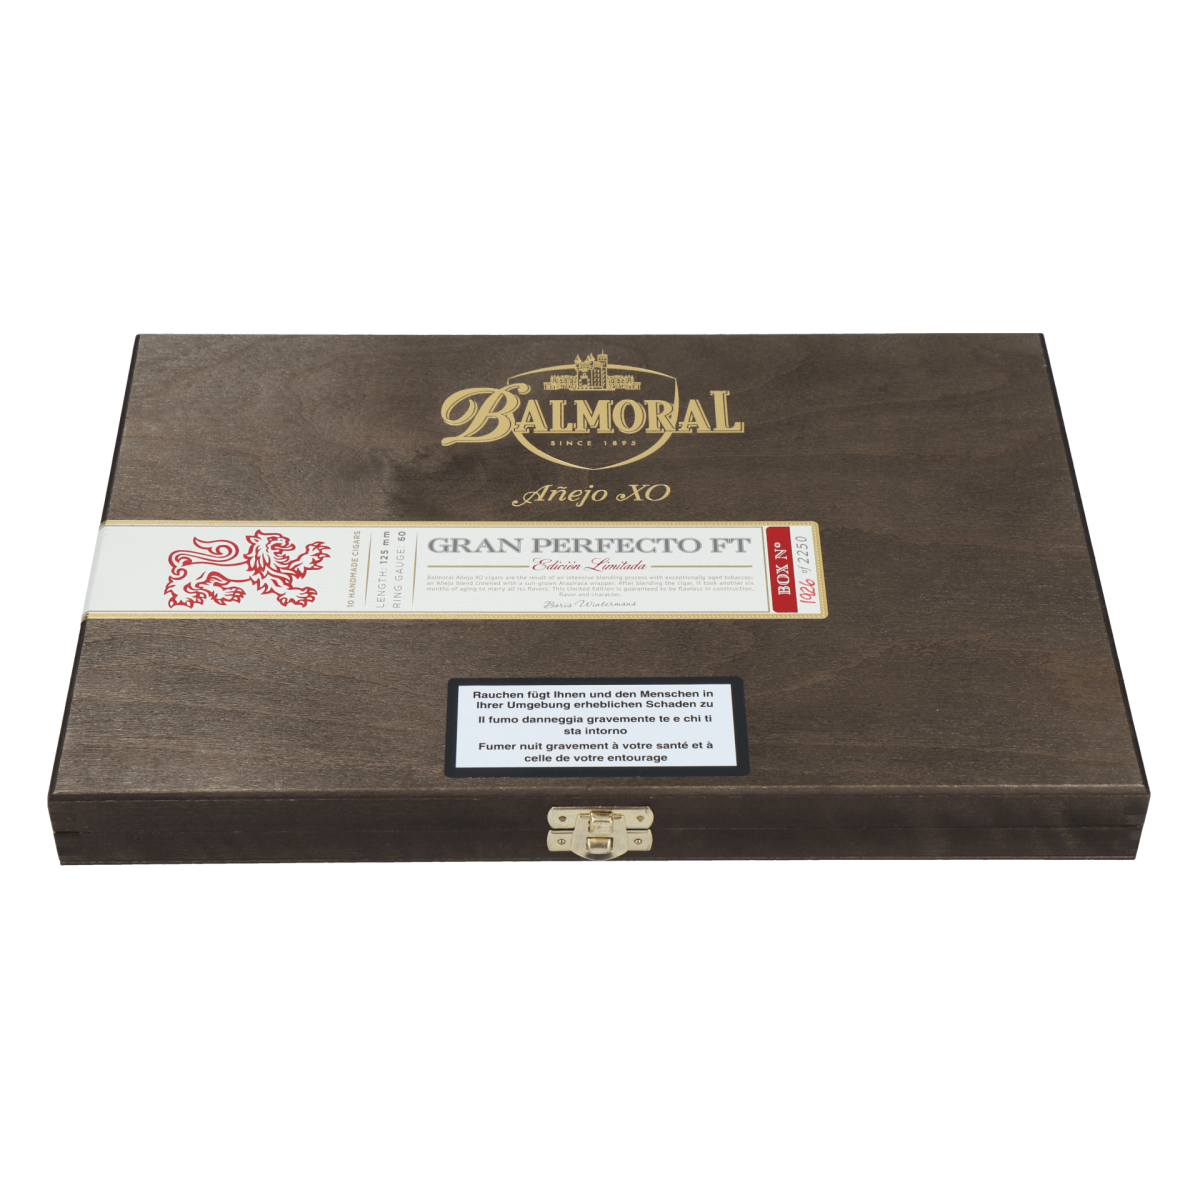 xì gà Balmoral Añejo XO Gran Perfecto FT Edicion Limitada 2018 hộp gỗ 10 điếu tại sài gòn